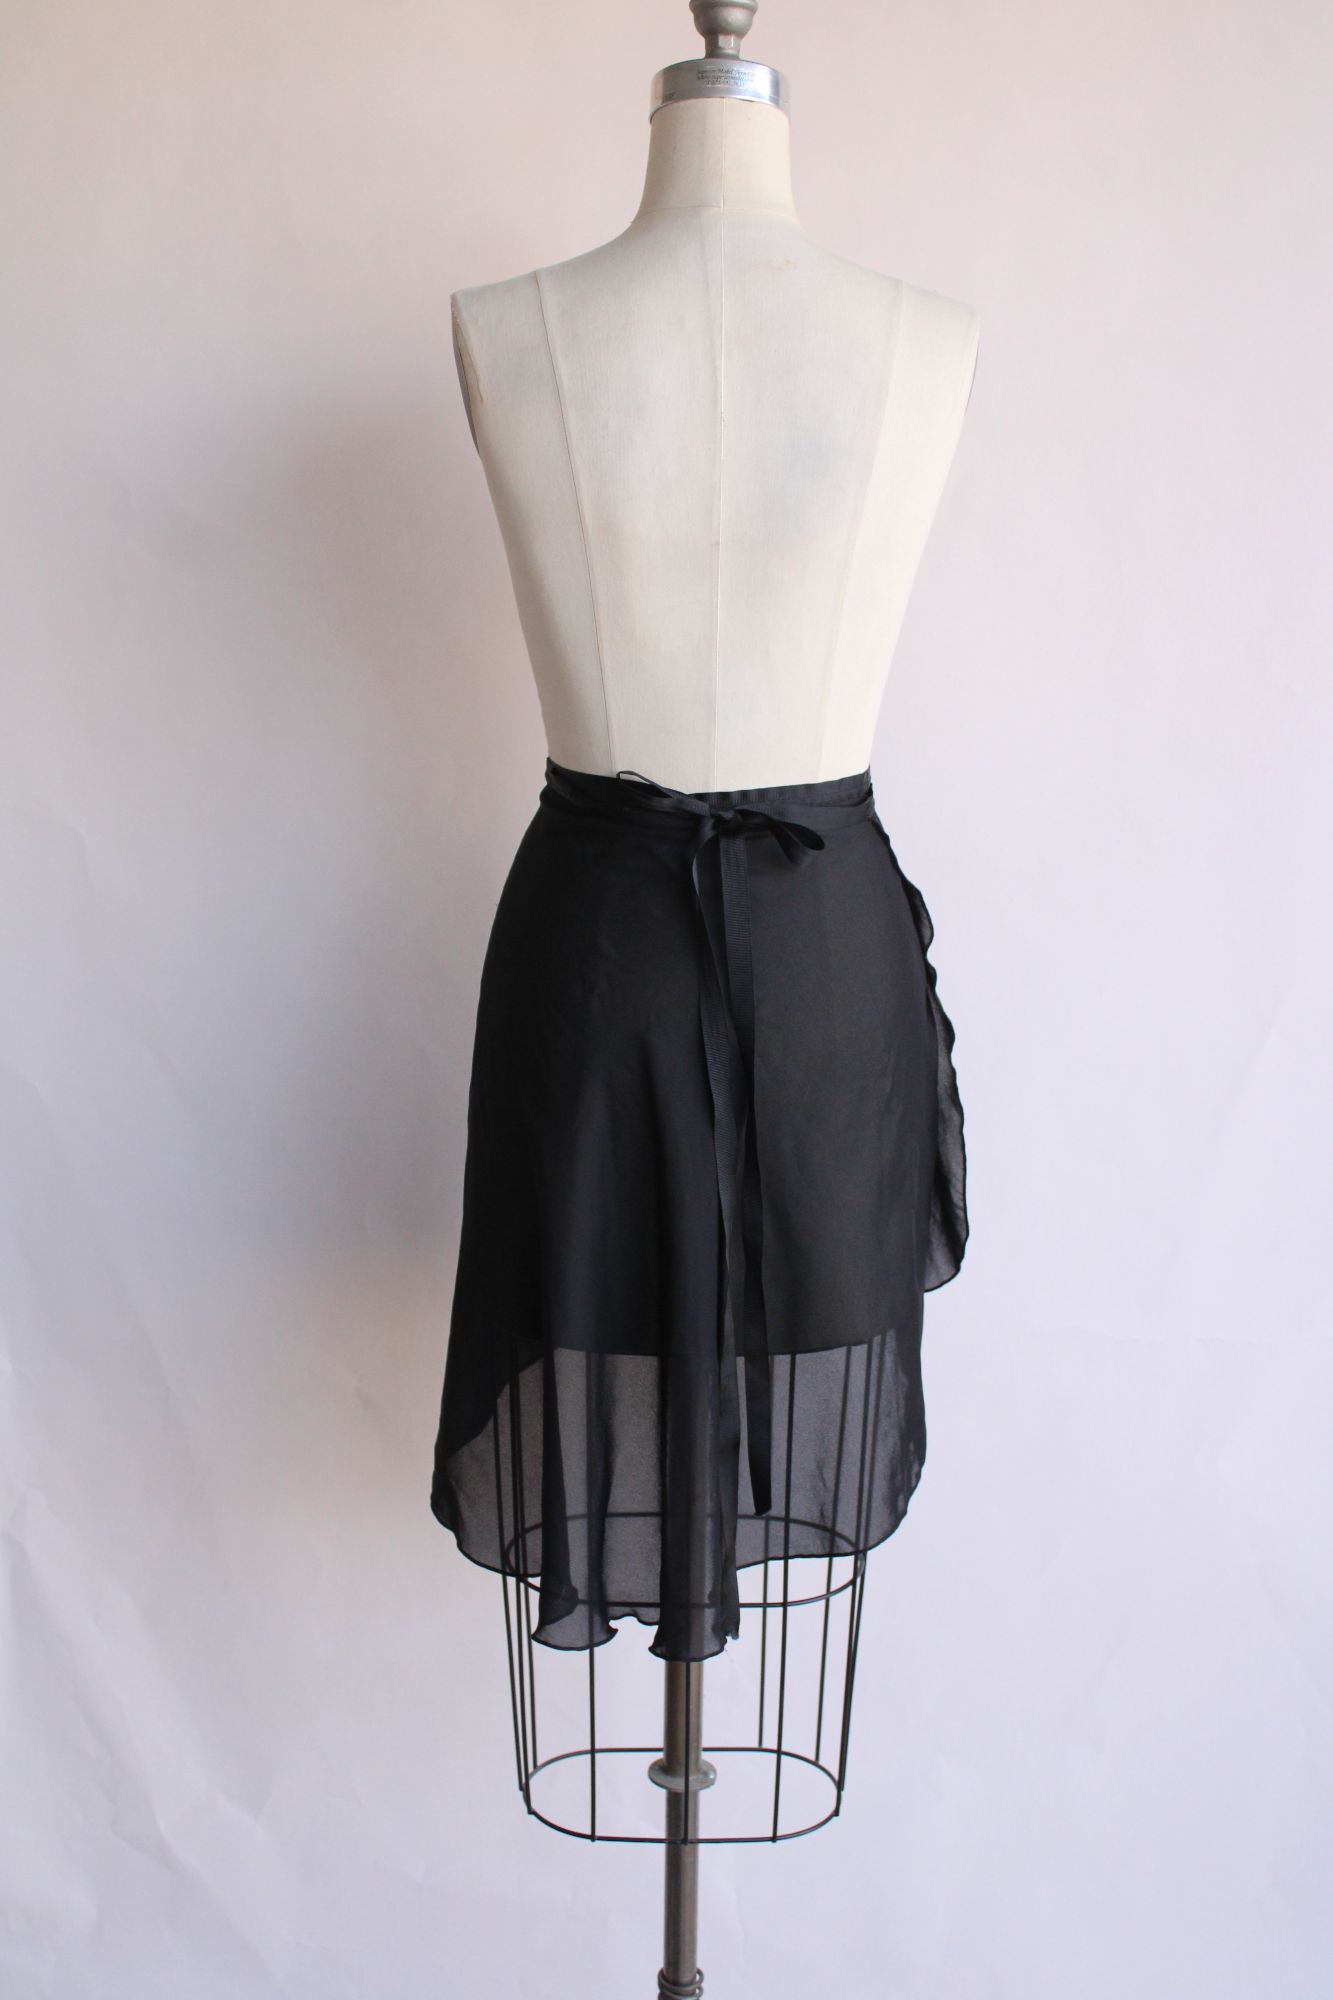 Capezio Womens Dance Wrap Skirt, Black Chiffon, Size M/L